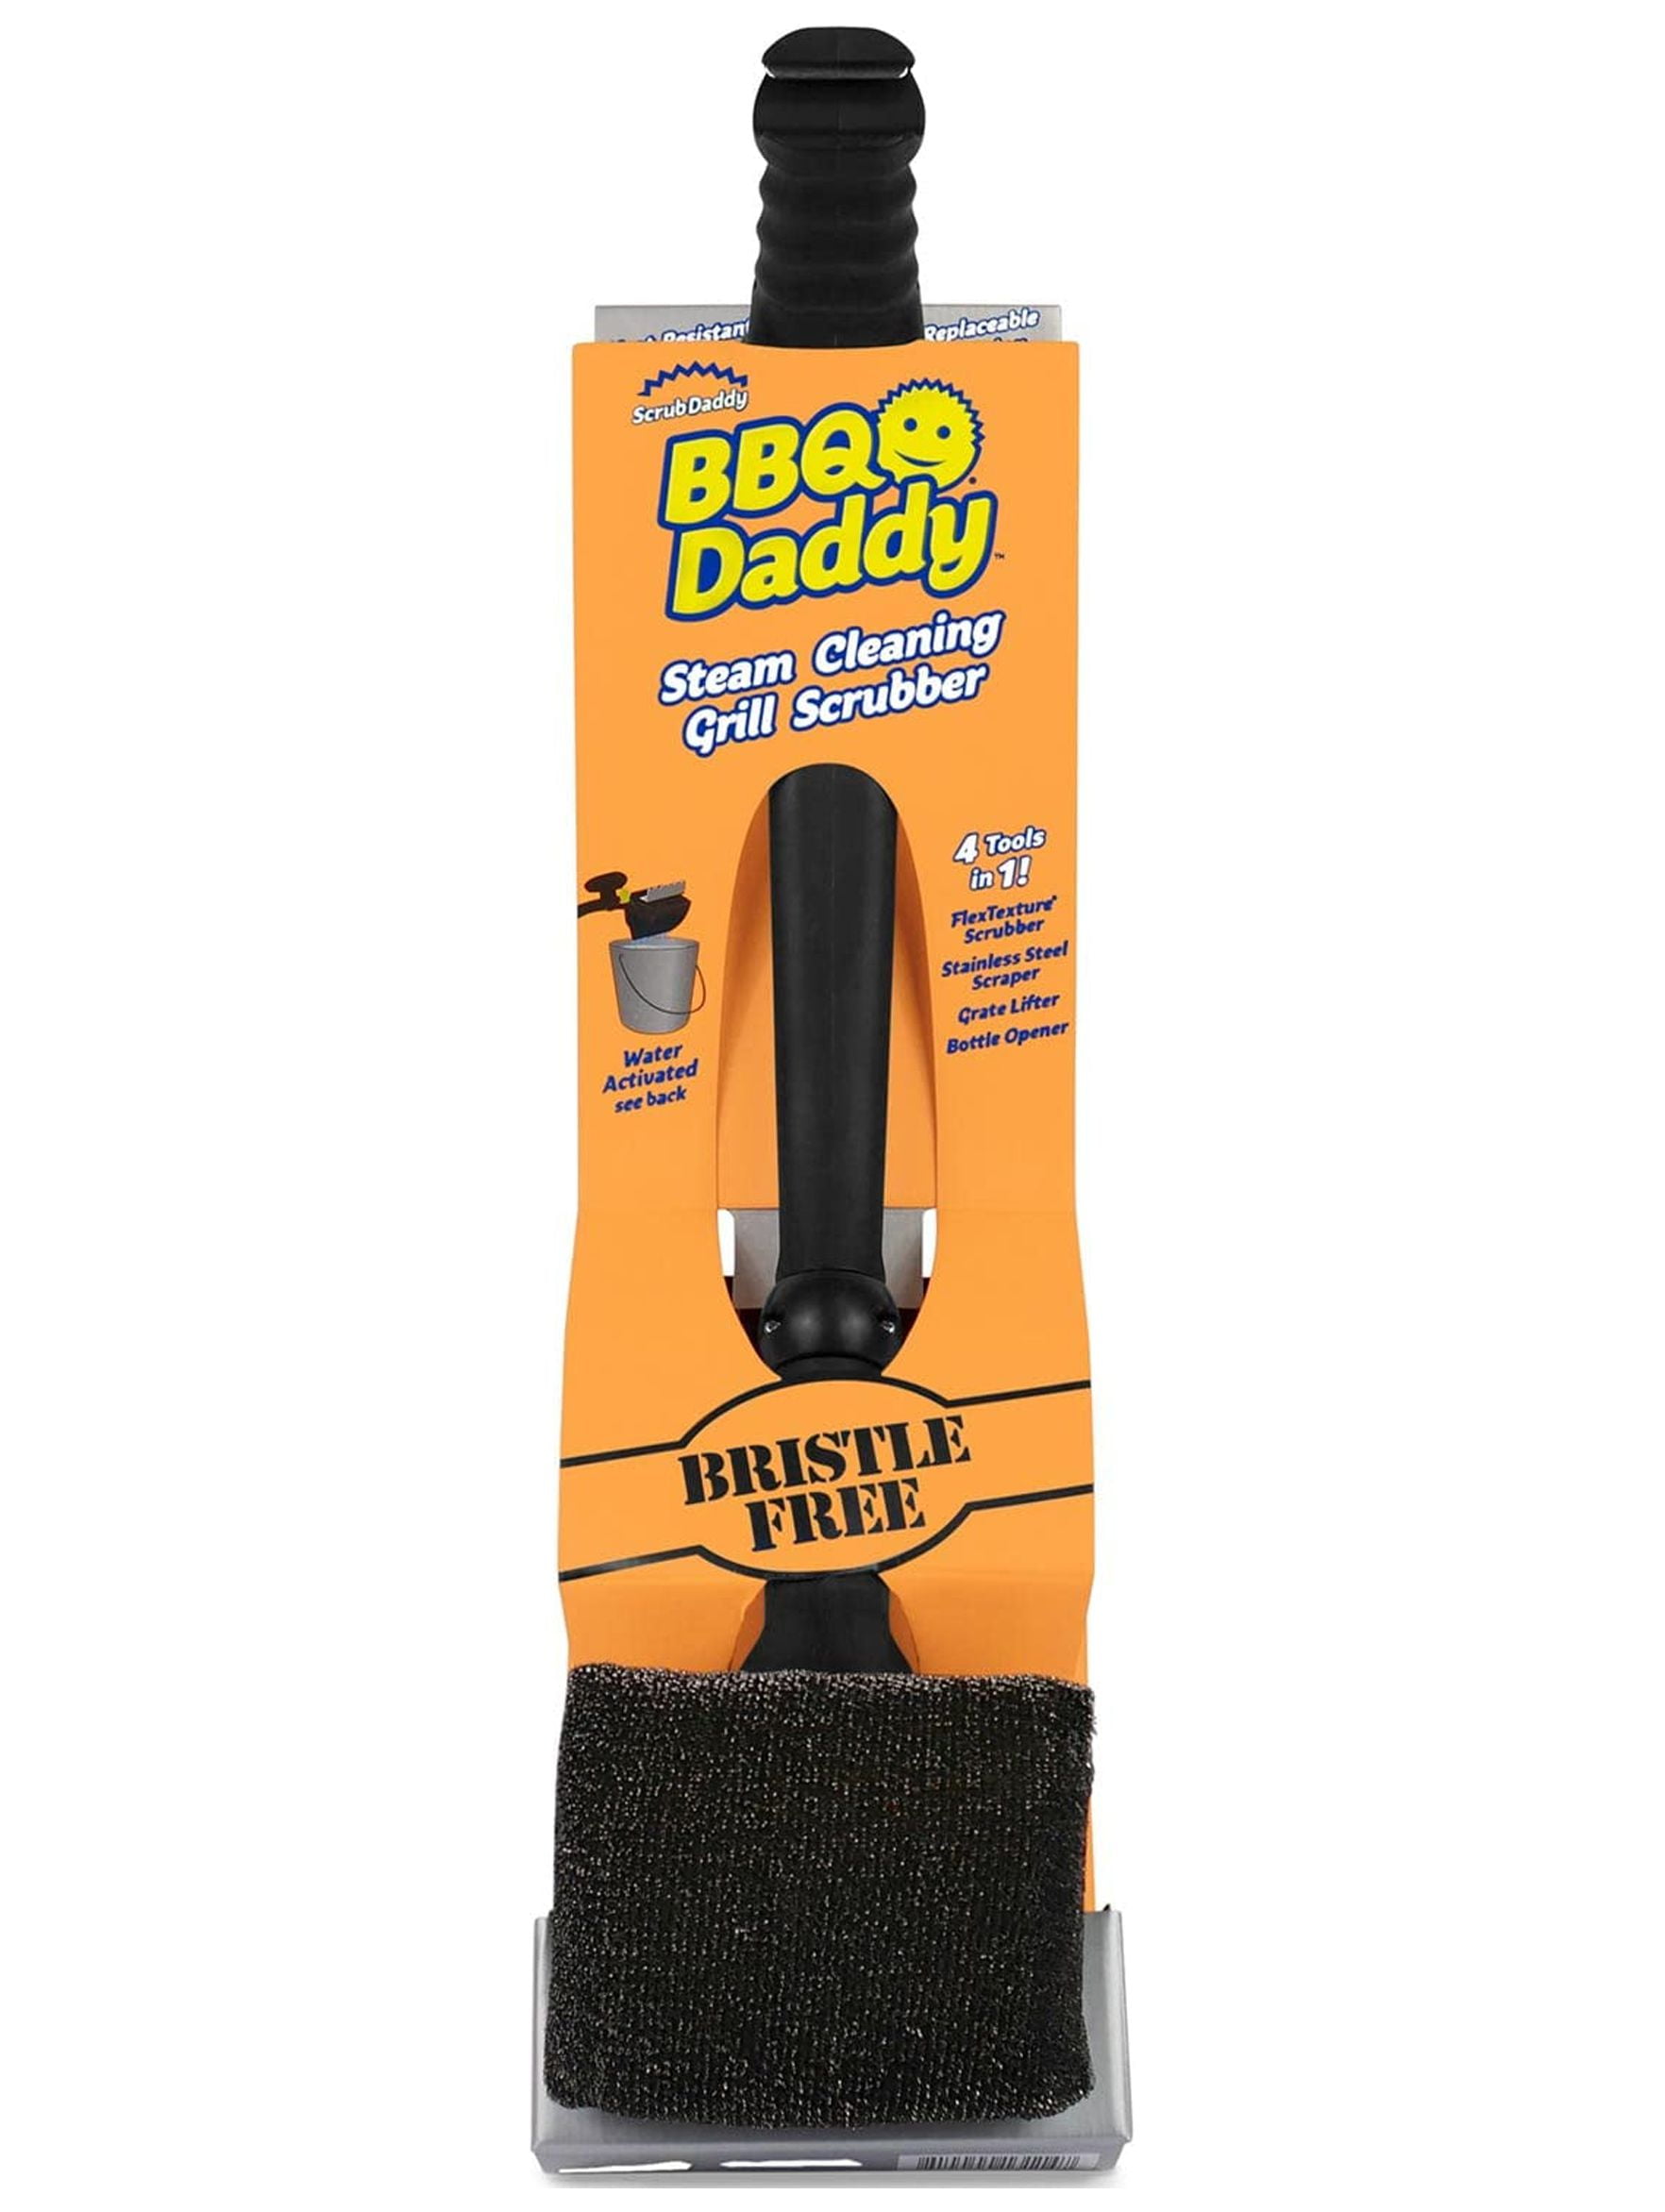 Scrub Daddy BBQ Daddy Heavy Duty Scouring Pad, 2 pk - Ralphs